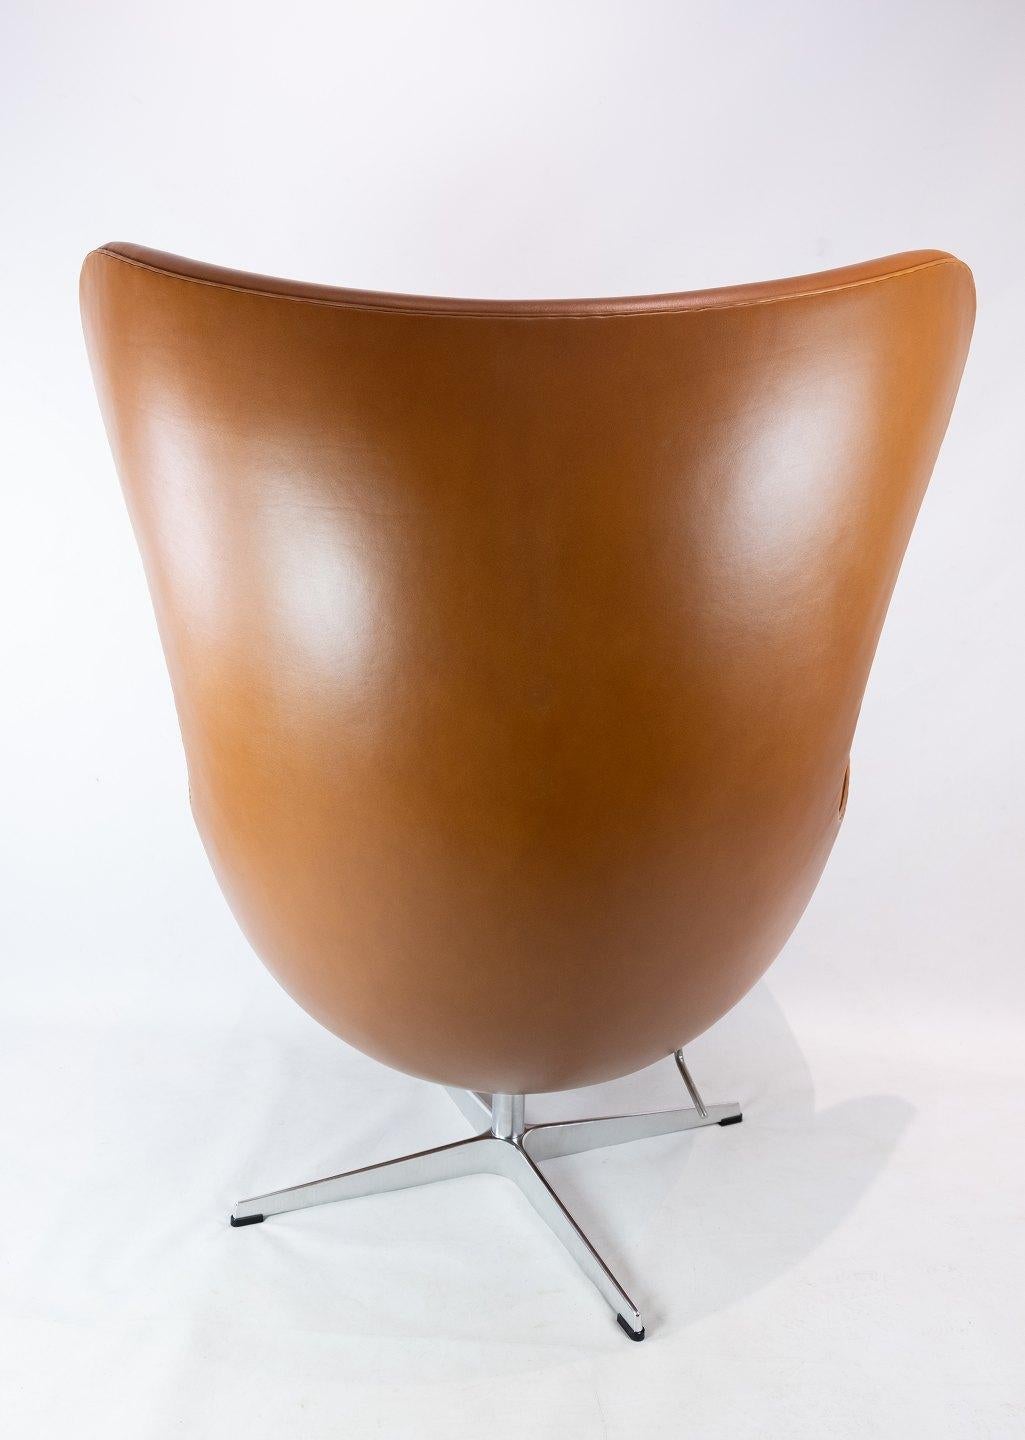 Scandinavian Modern The Egg, Model 3316 by Arne Jacobsen and Fritz Hansen